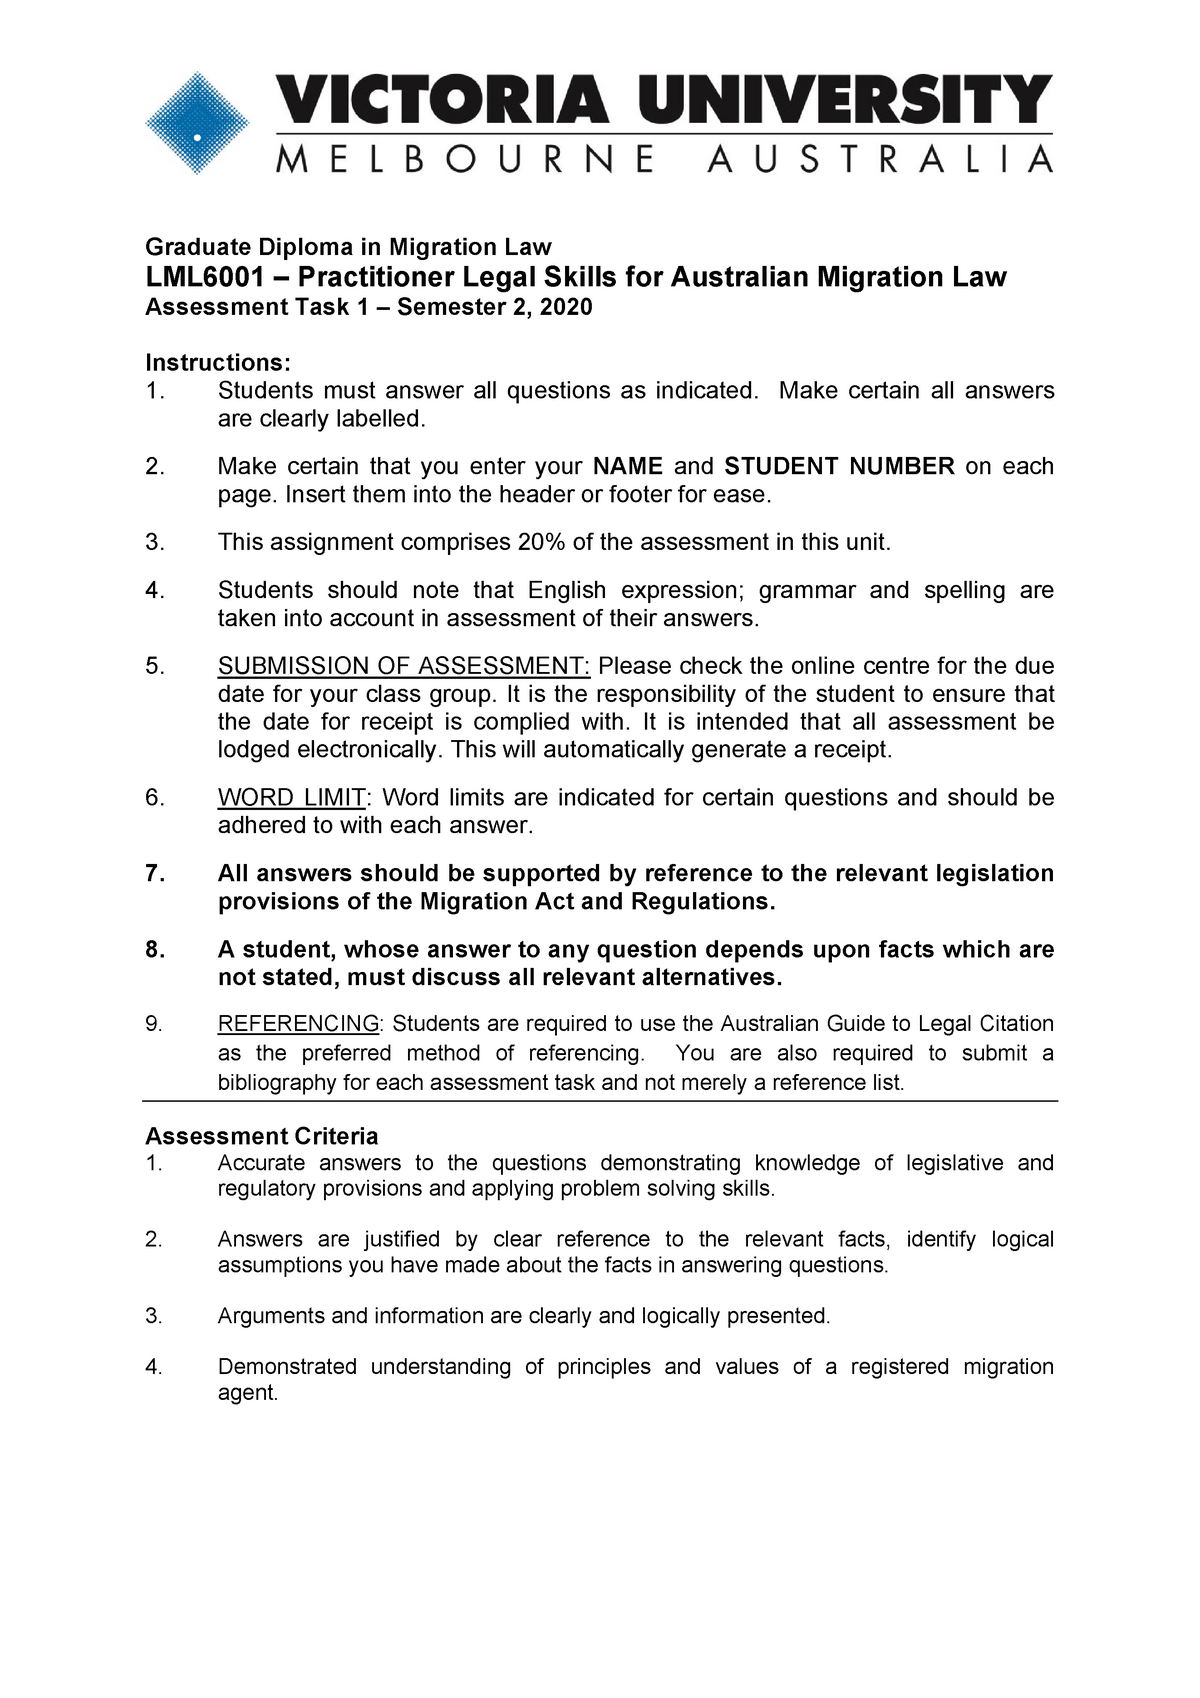 LML6001 1, S2 2020 - Warning: TT: undefined function: 32 Graduate Diploma in Migration Law - StuDocu